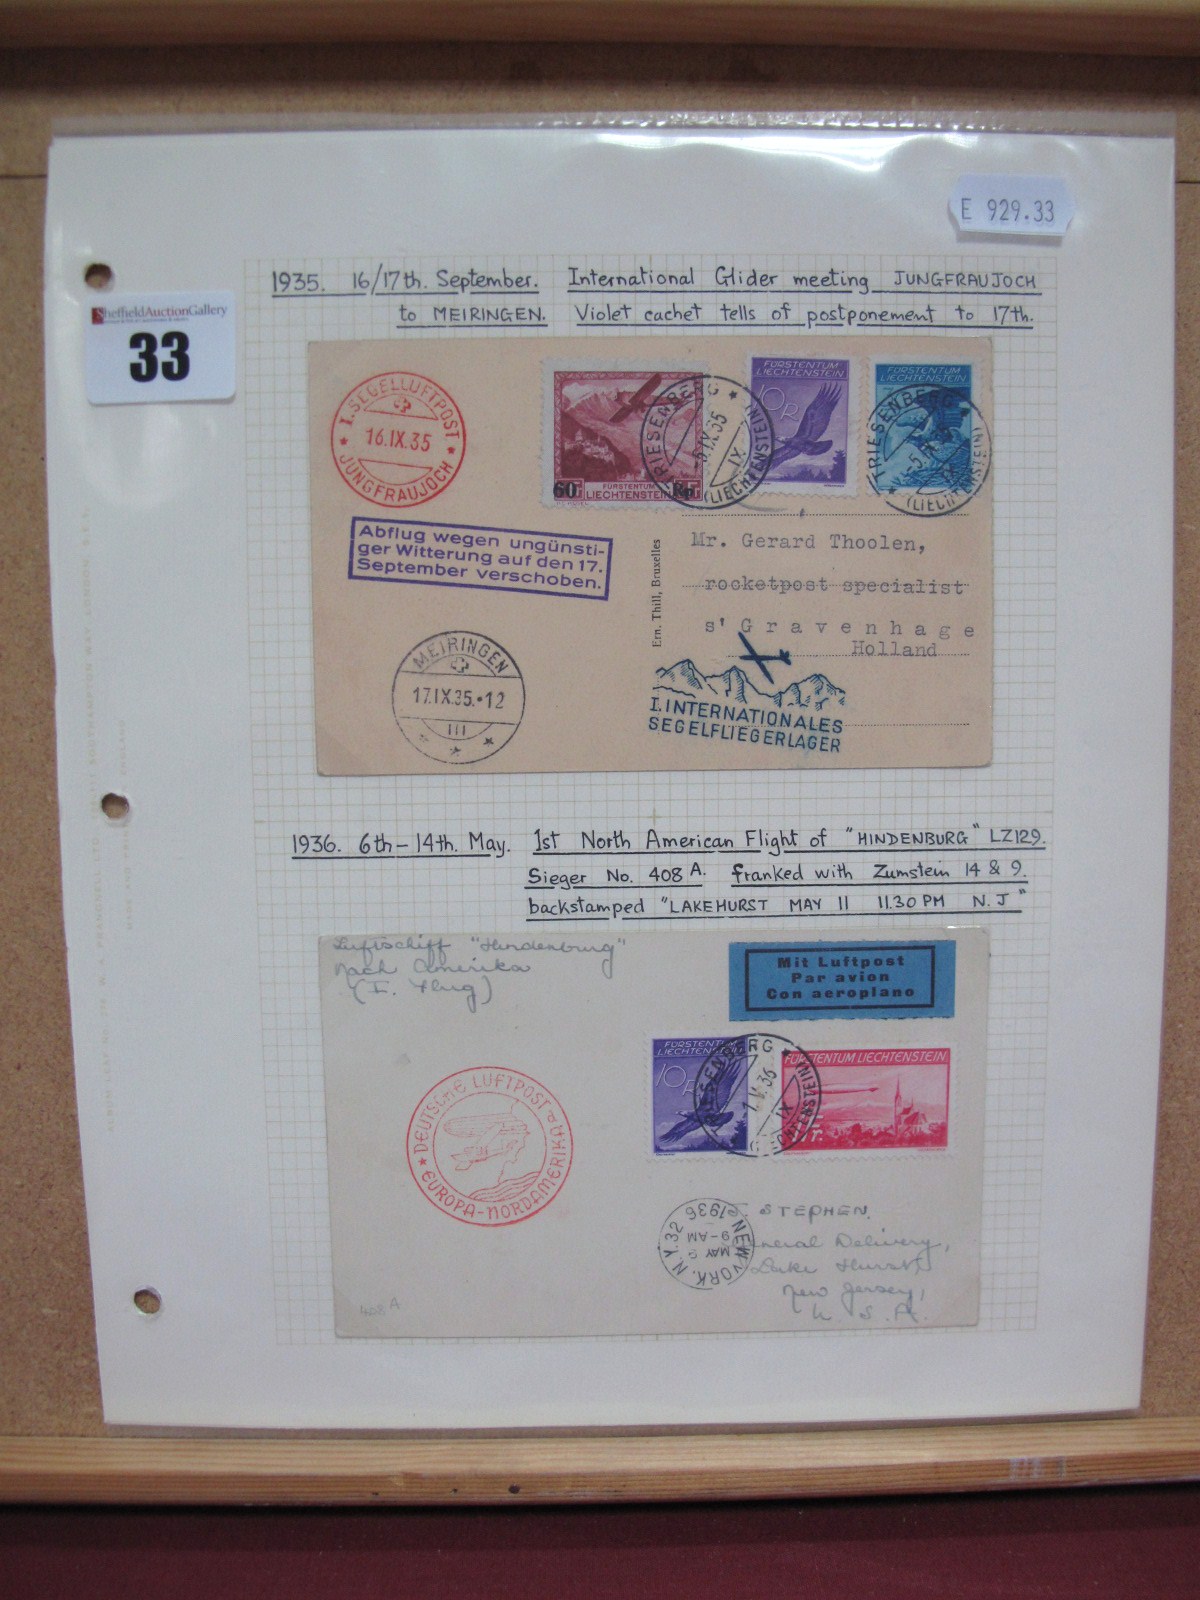 1935, 16th-17th September International Glider Meeting Postcard, Jungfraujoch to Meirlingen (